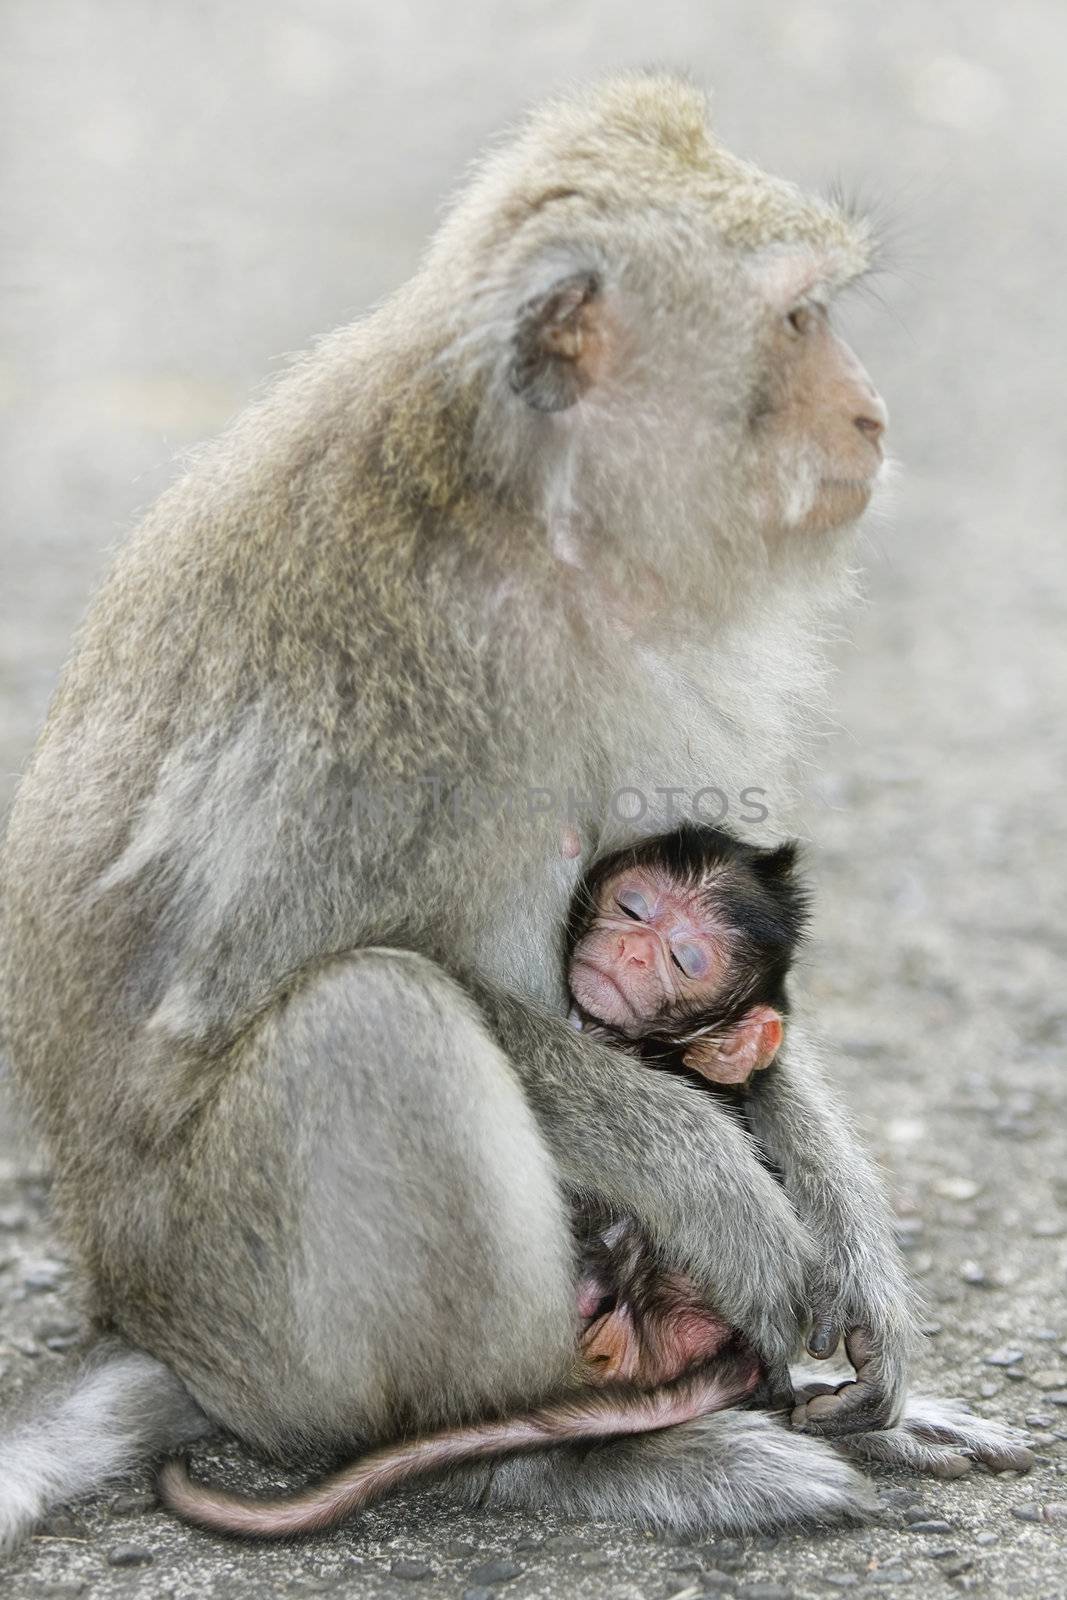 Macaque monkey by kjorgen